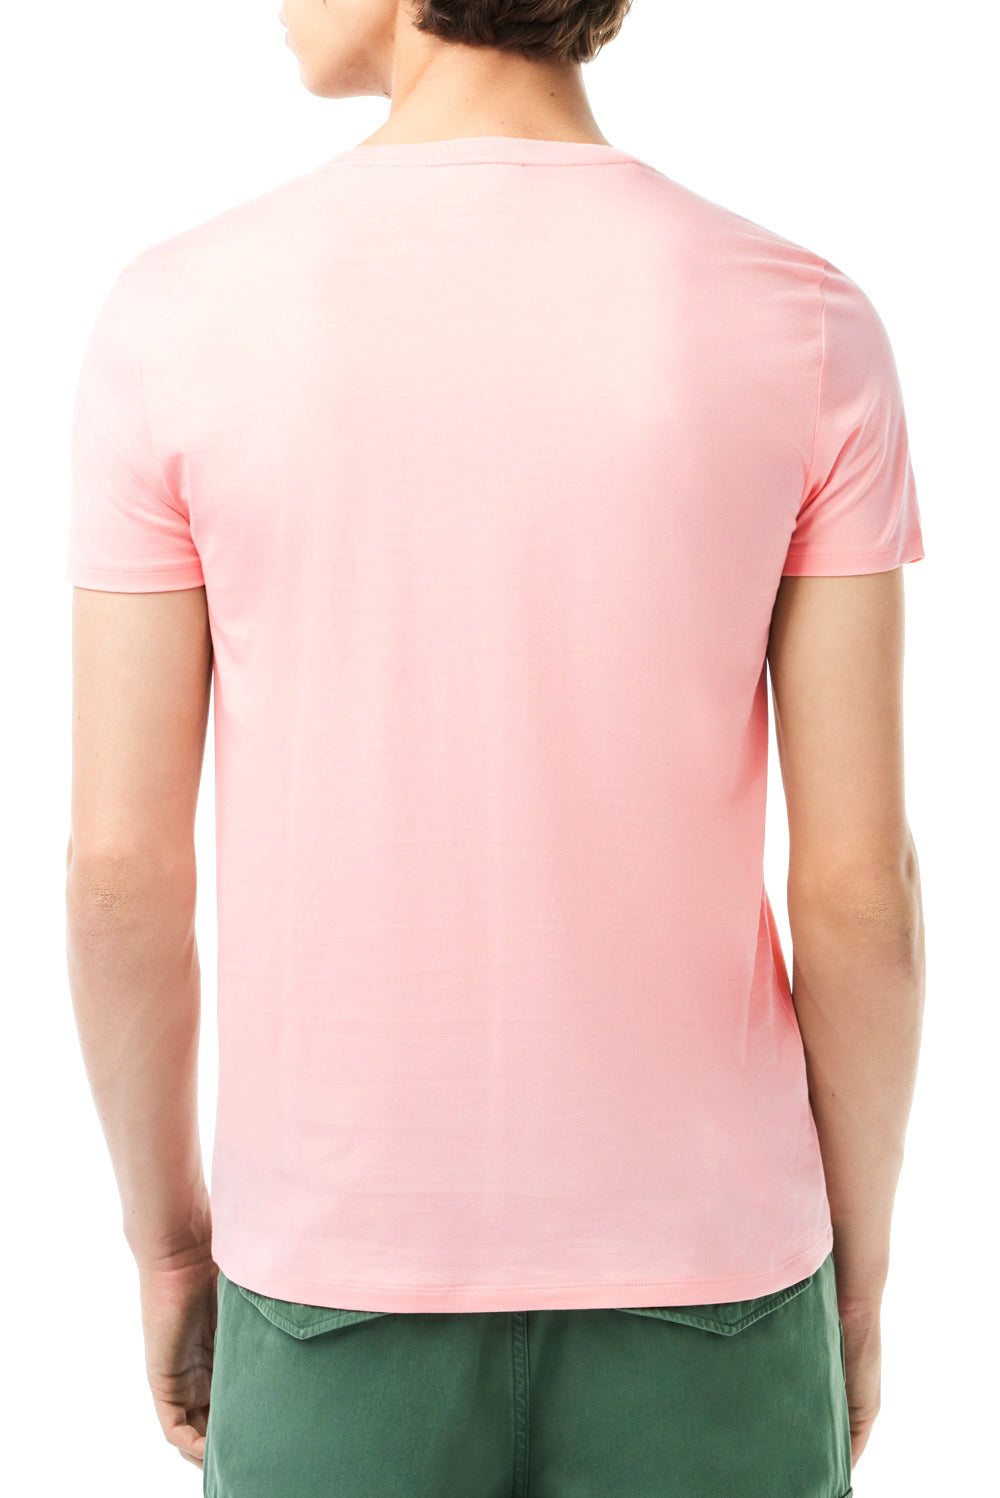  Lacoste Classic T-shirt Rosa Uomo - 3